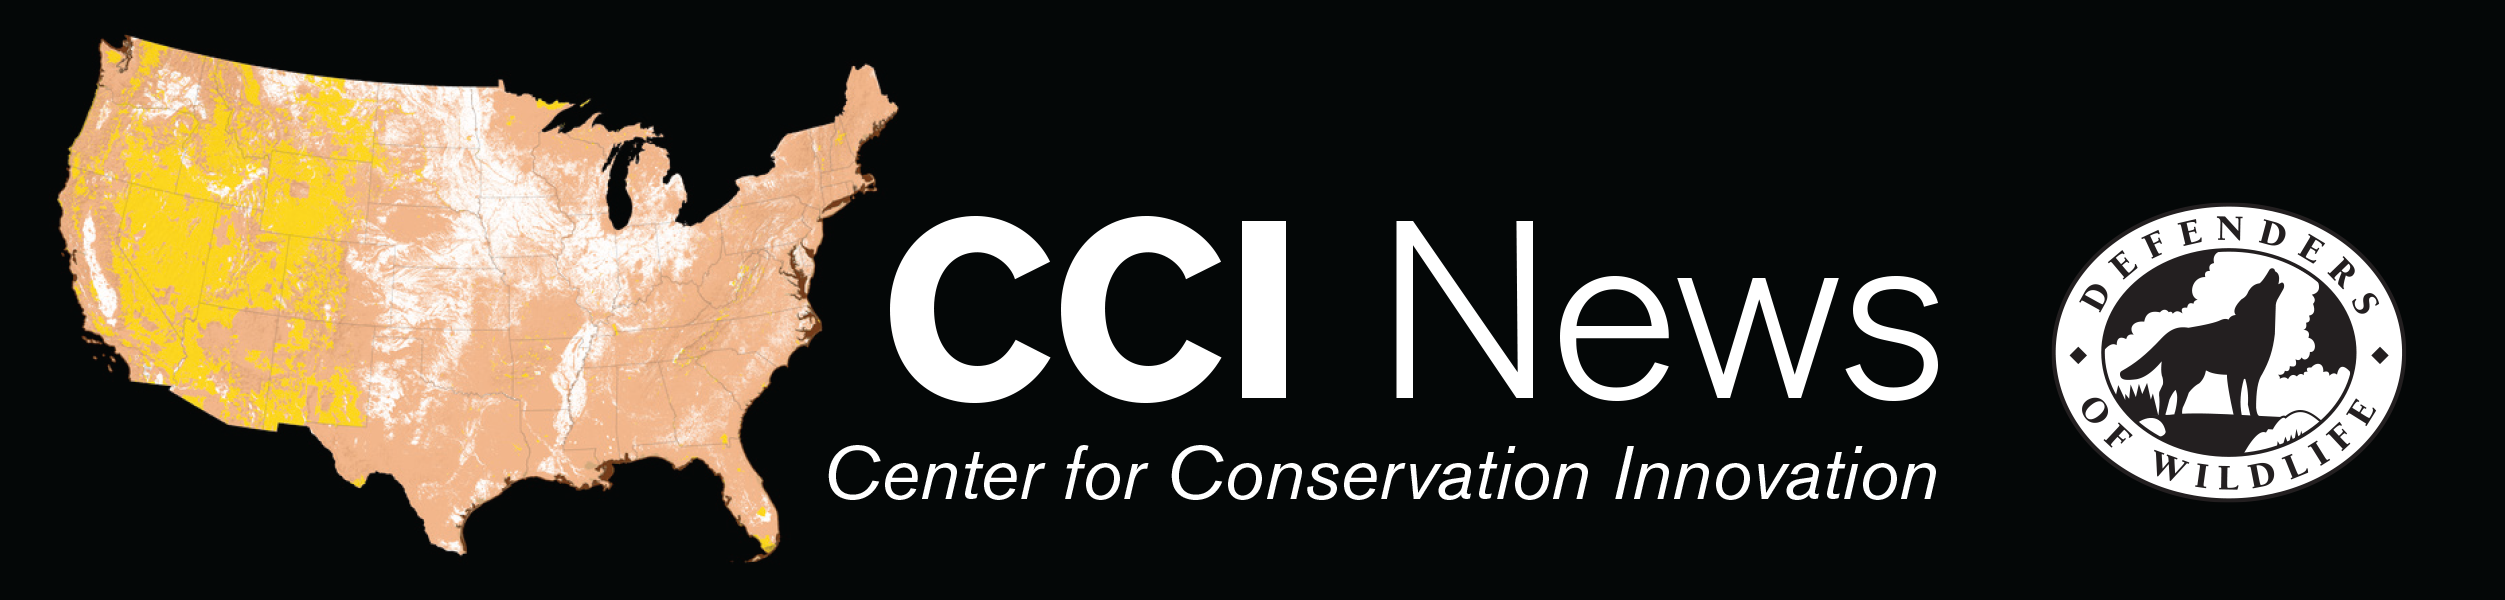 The CCI News newsletter banner.